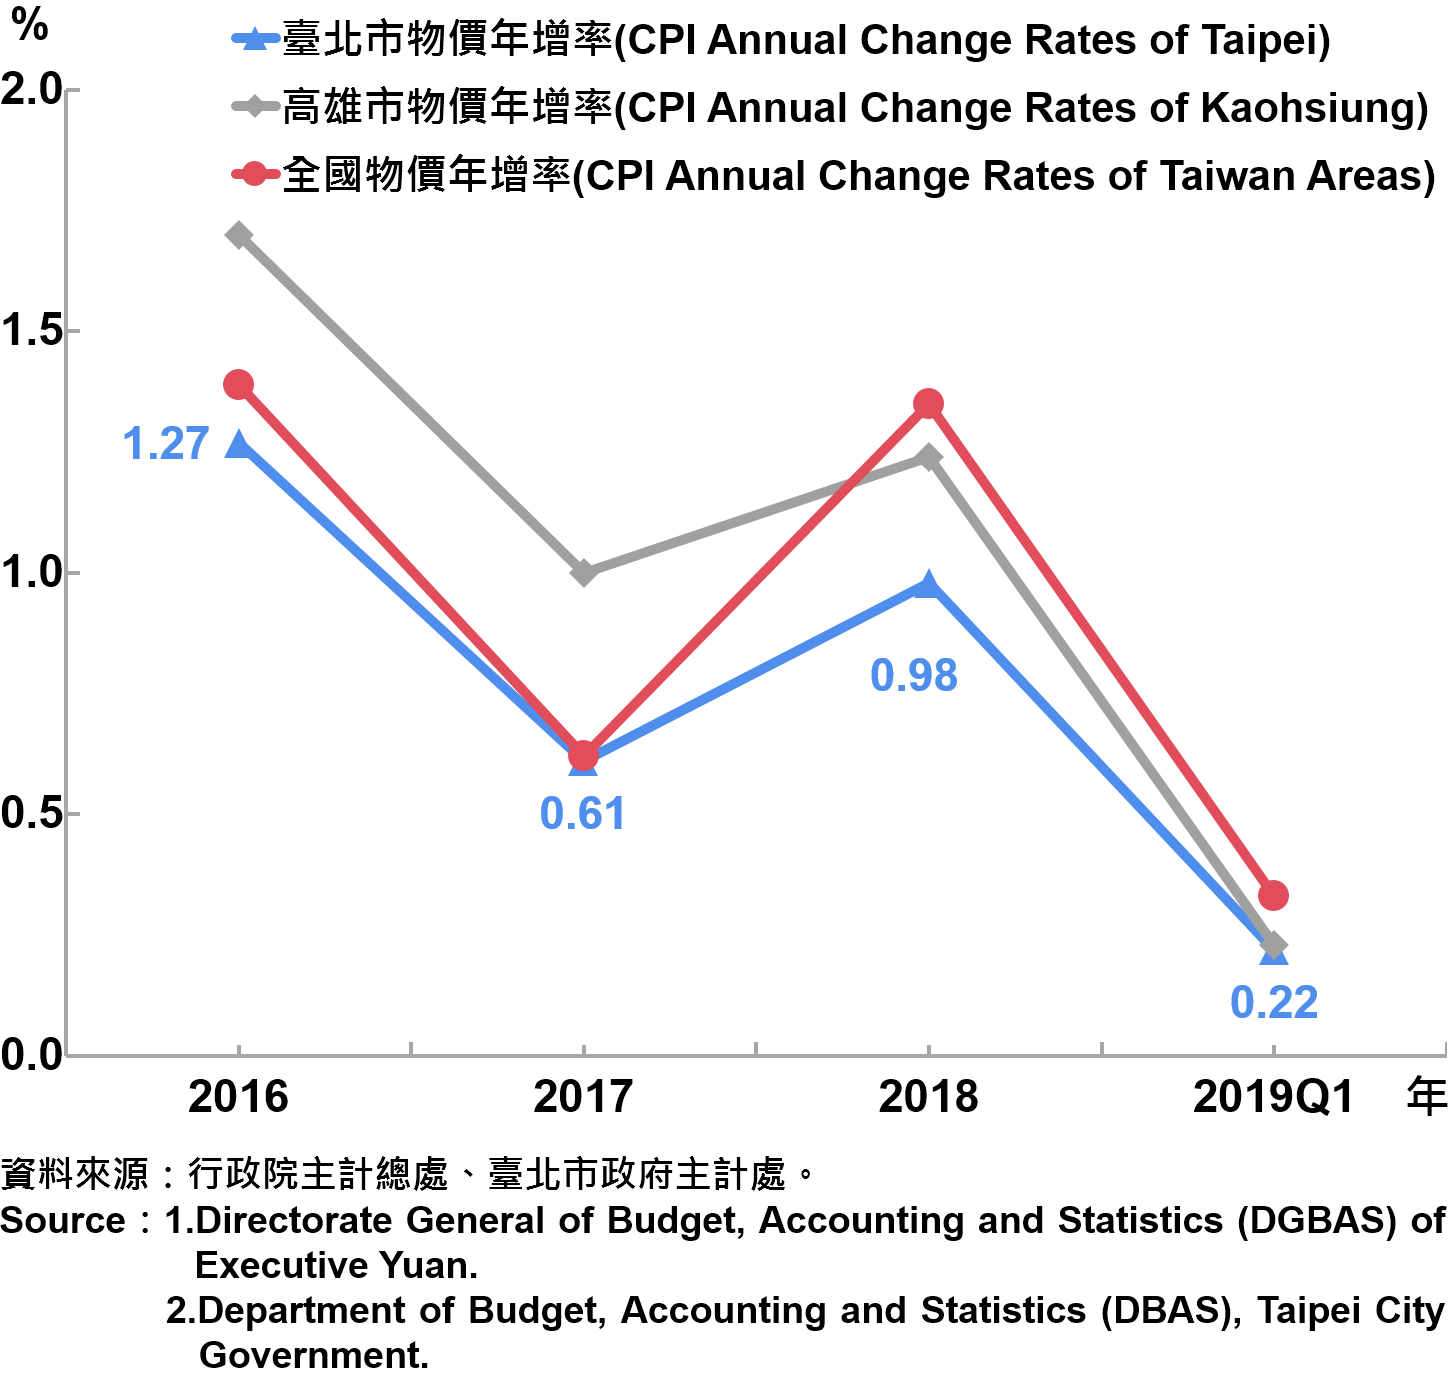 臺北市消費者物價指數（CPI）年增率—2019Q1 Annual Growth Rate of CPI in Taipei City—2019Q1